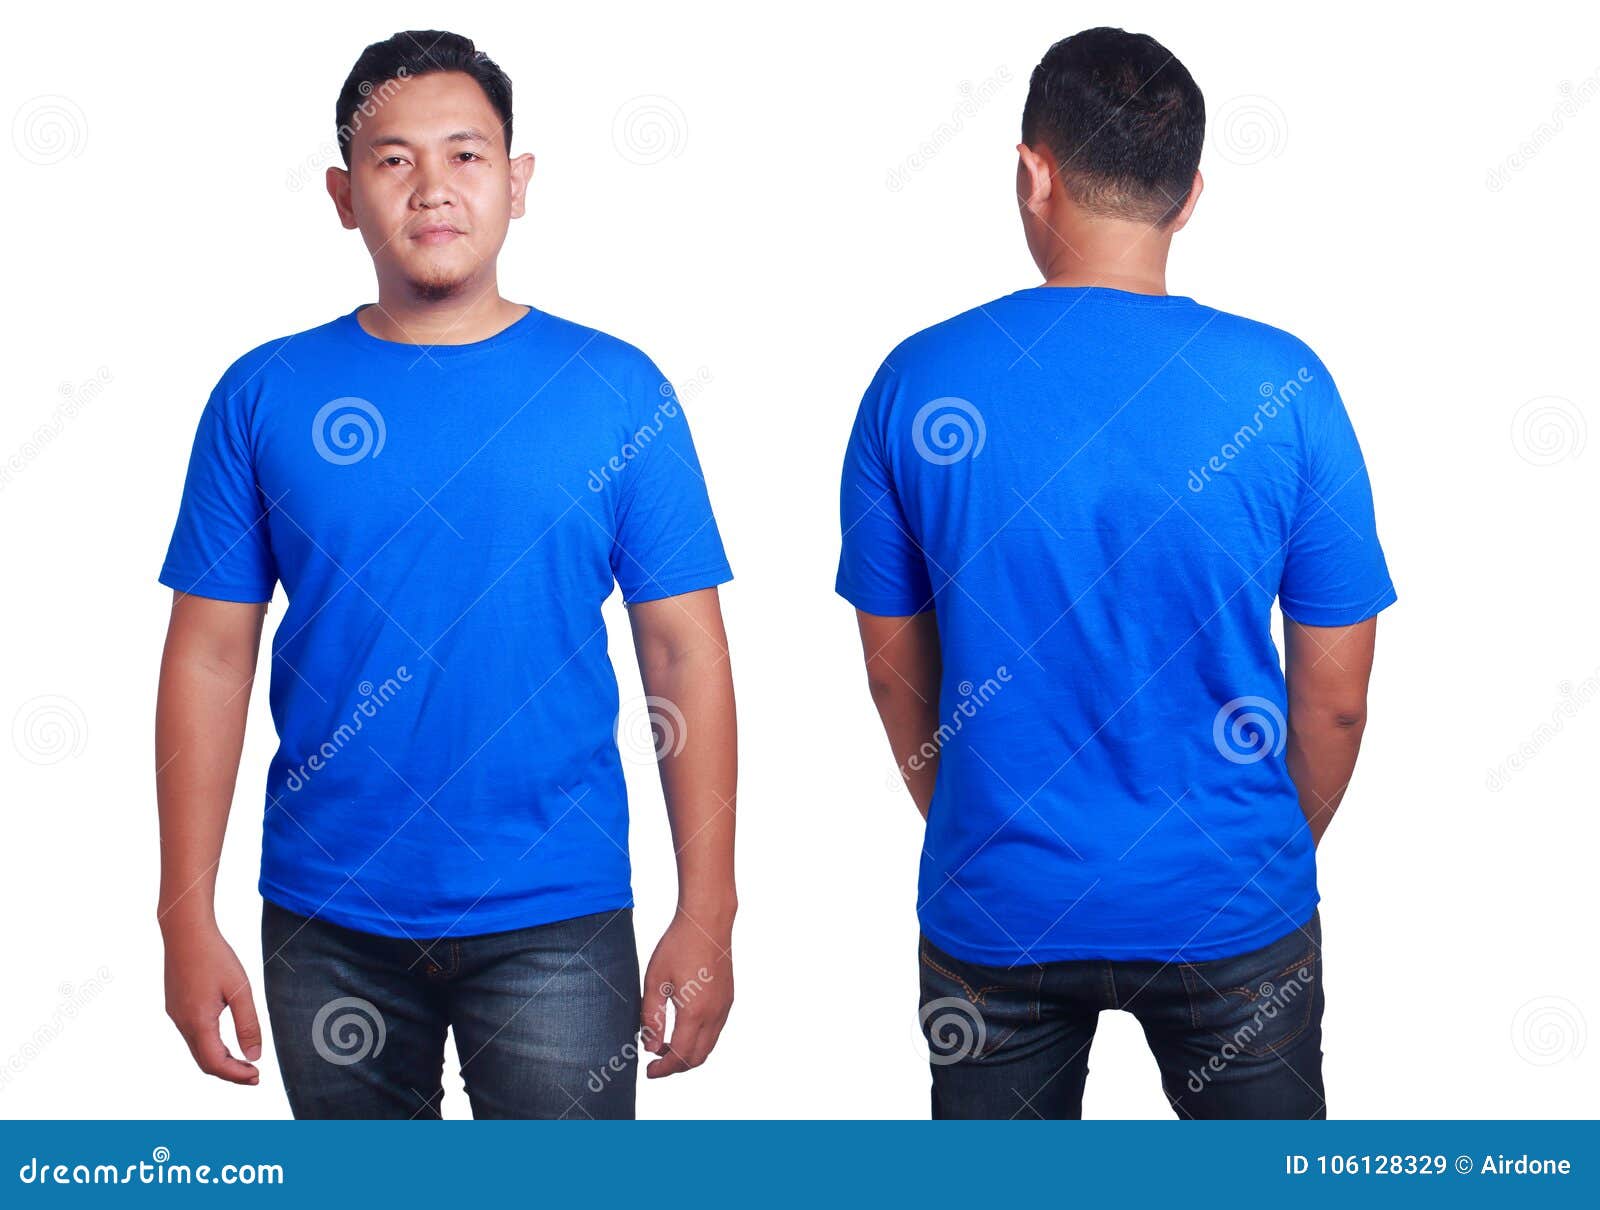 Blue Shirt Mockup Template Stock Image. Image Of Shirt - 106128329